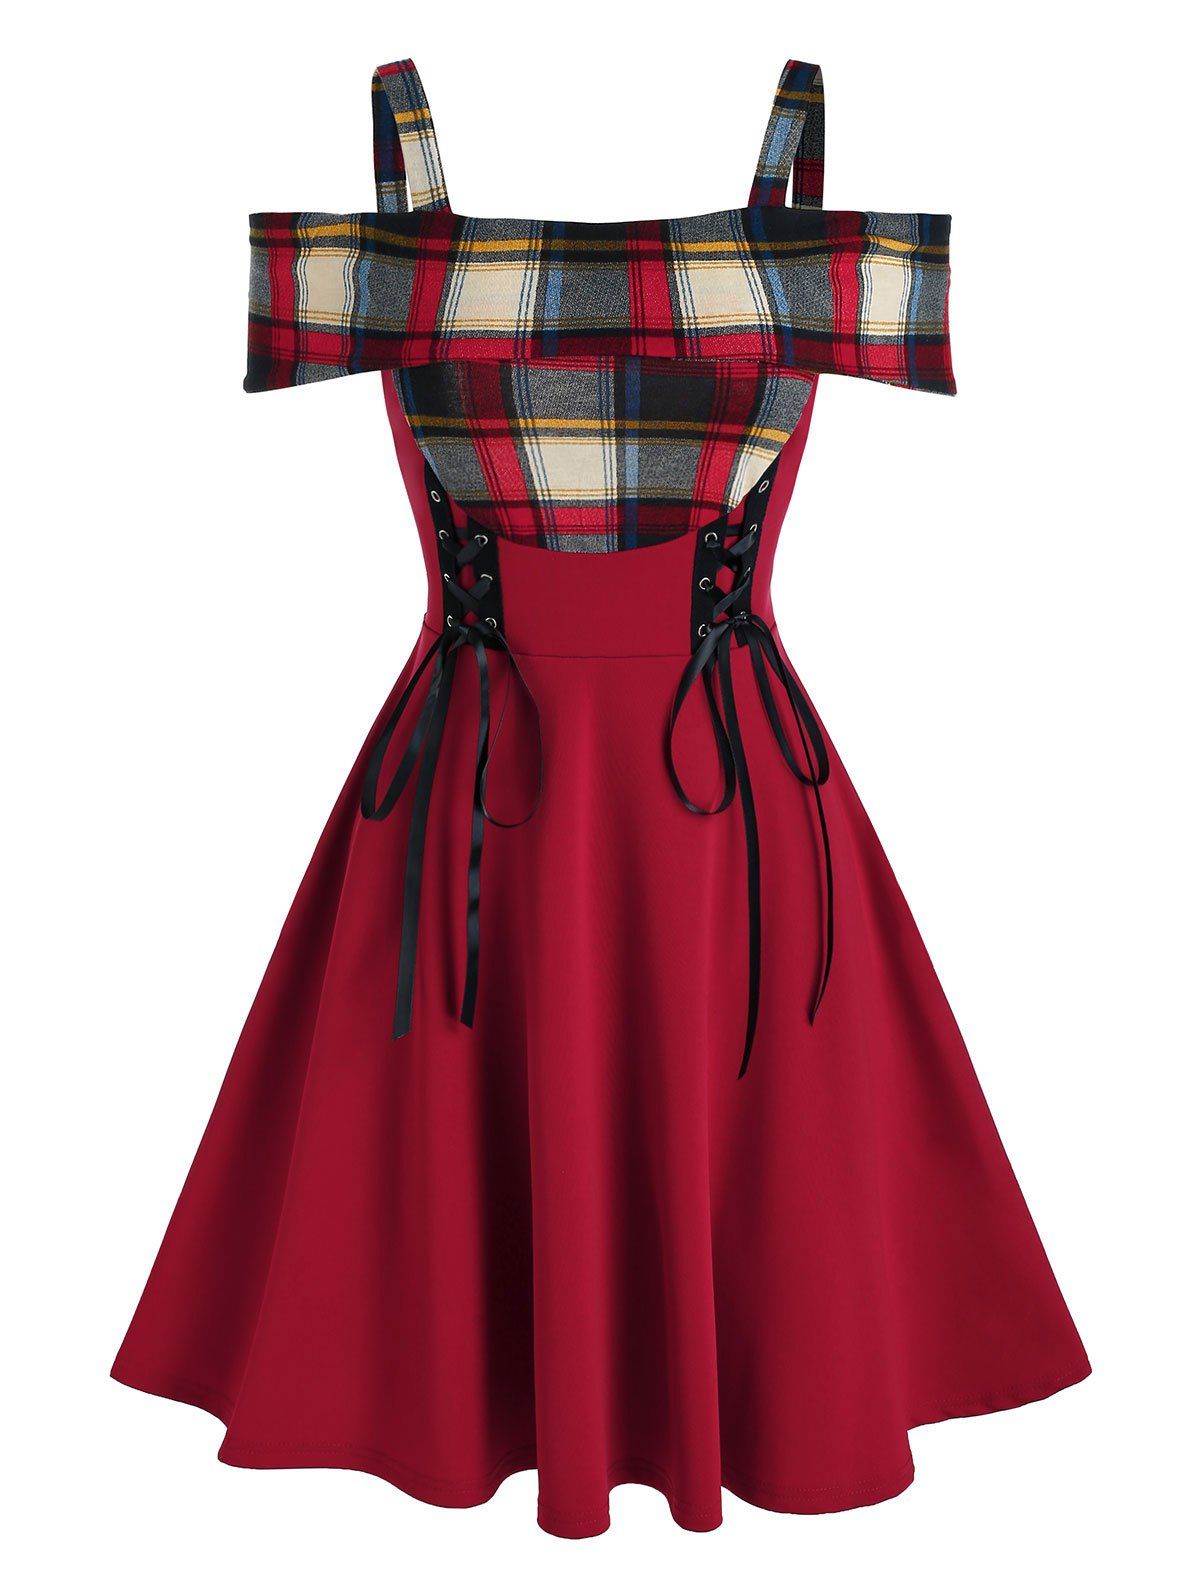 Lace Up Corset Style Cold Shoulder Plaid Dress - DEEP RED 2XL